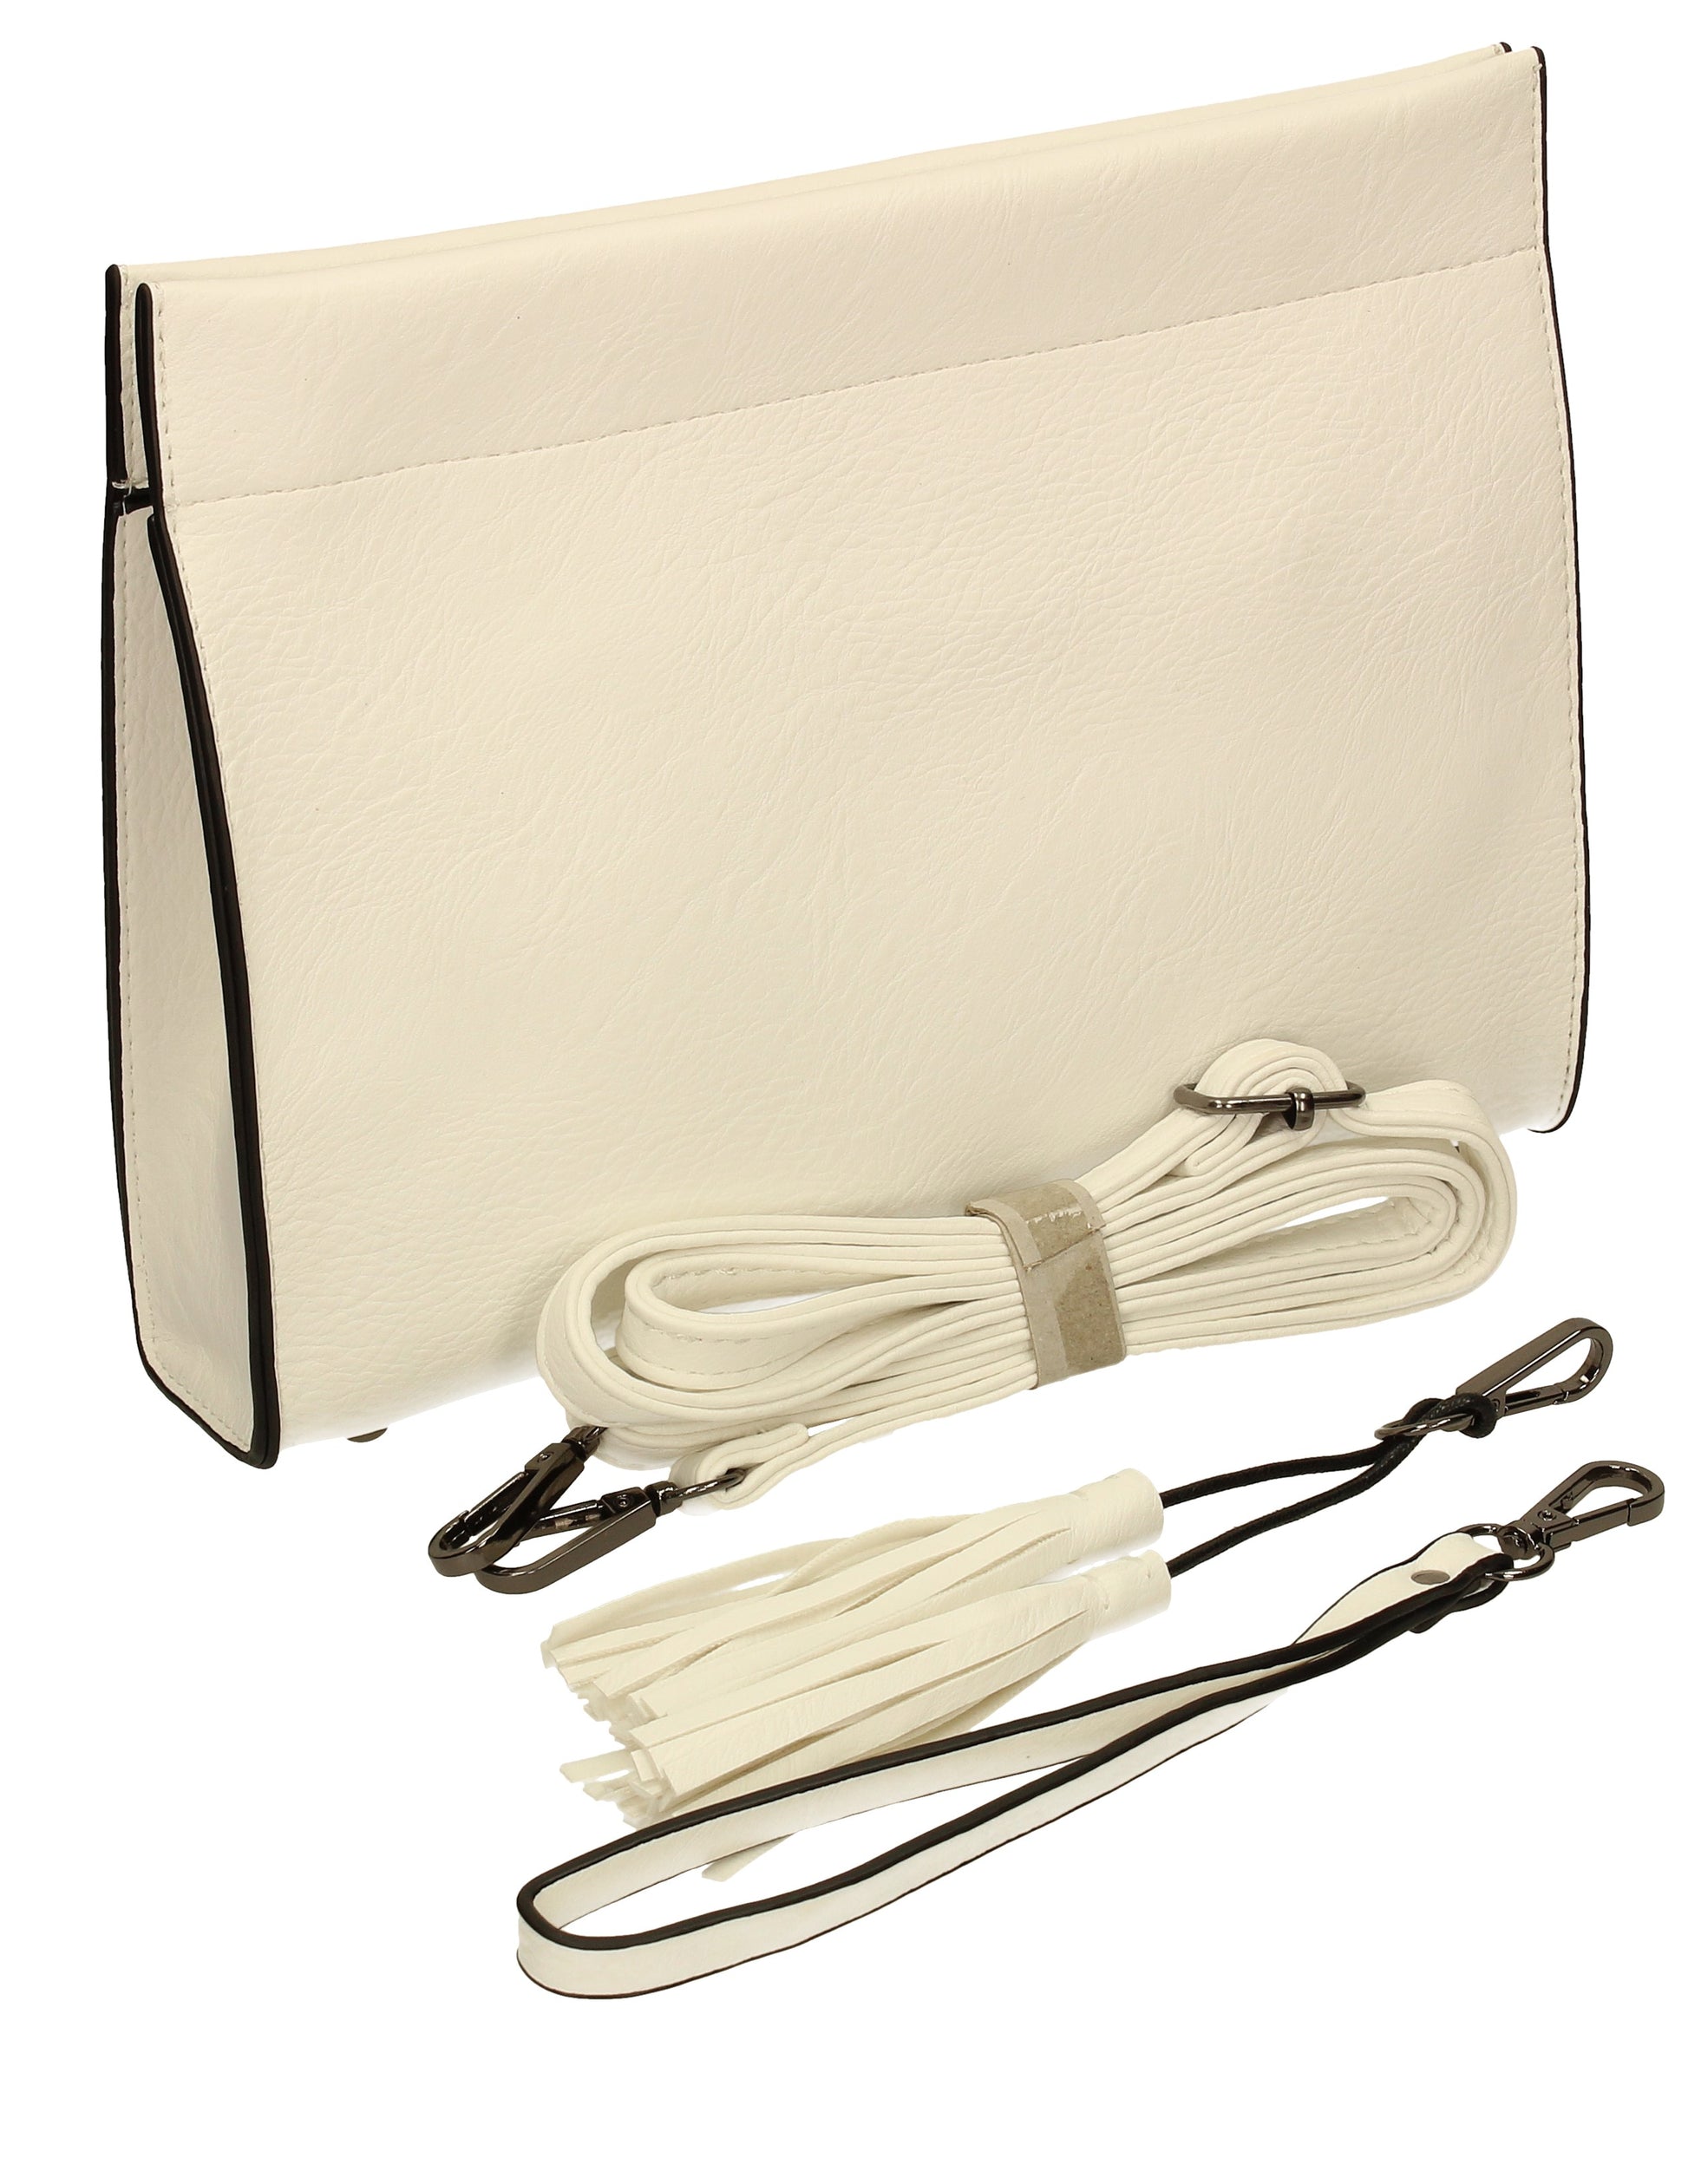 SWANKYSWANS Dina Tassel Clutch Bag White Cute Cheap Clutch Bag For Weddings School and Work